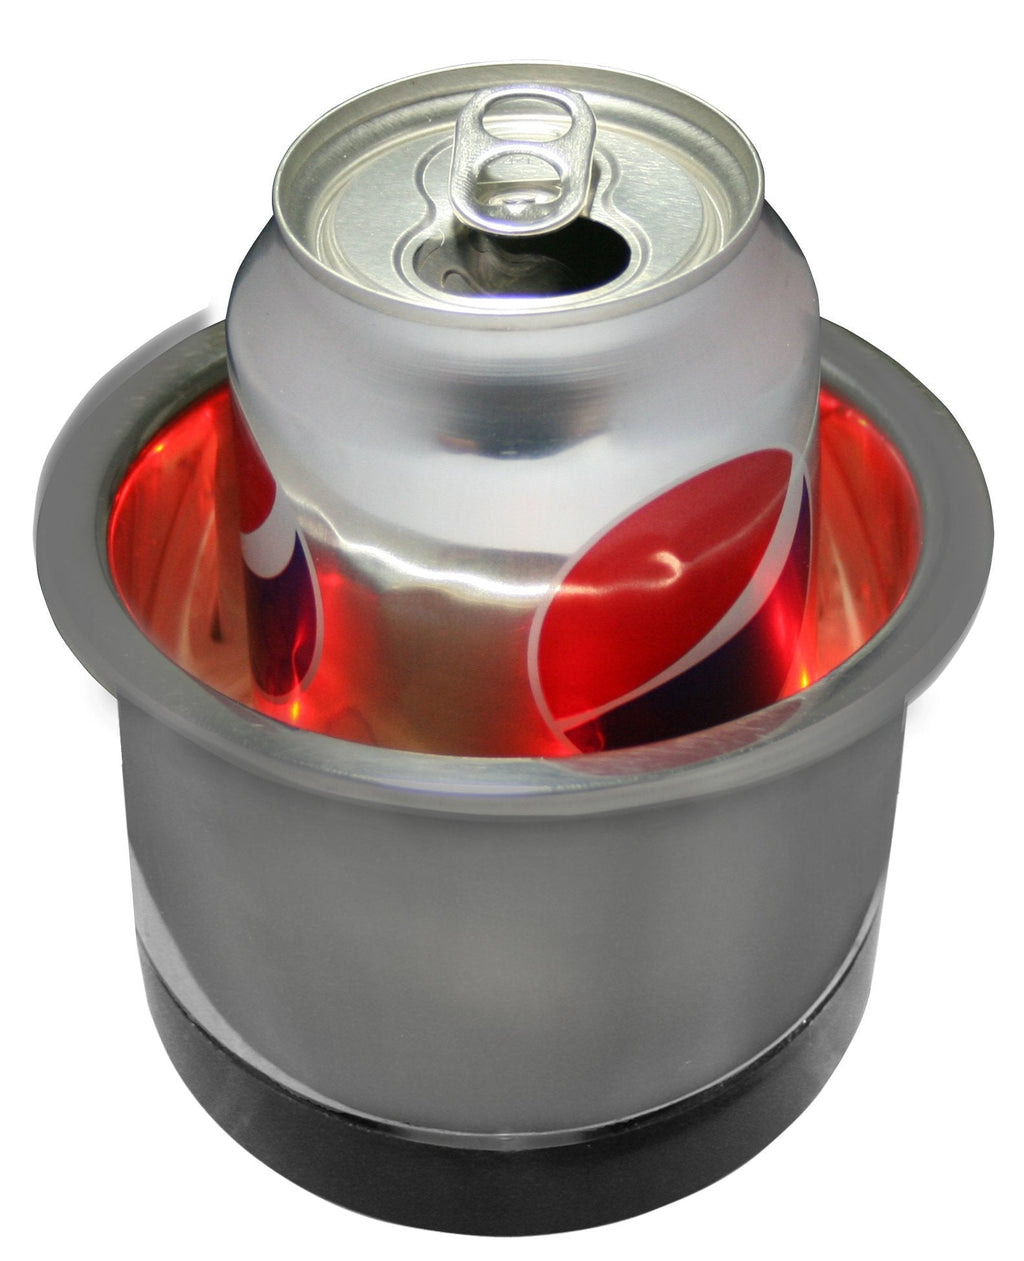  [AUSTRALIA] - SeaSense Stainless Steel Cup Holder LED Illuminated Red